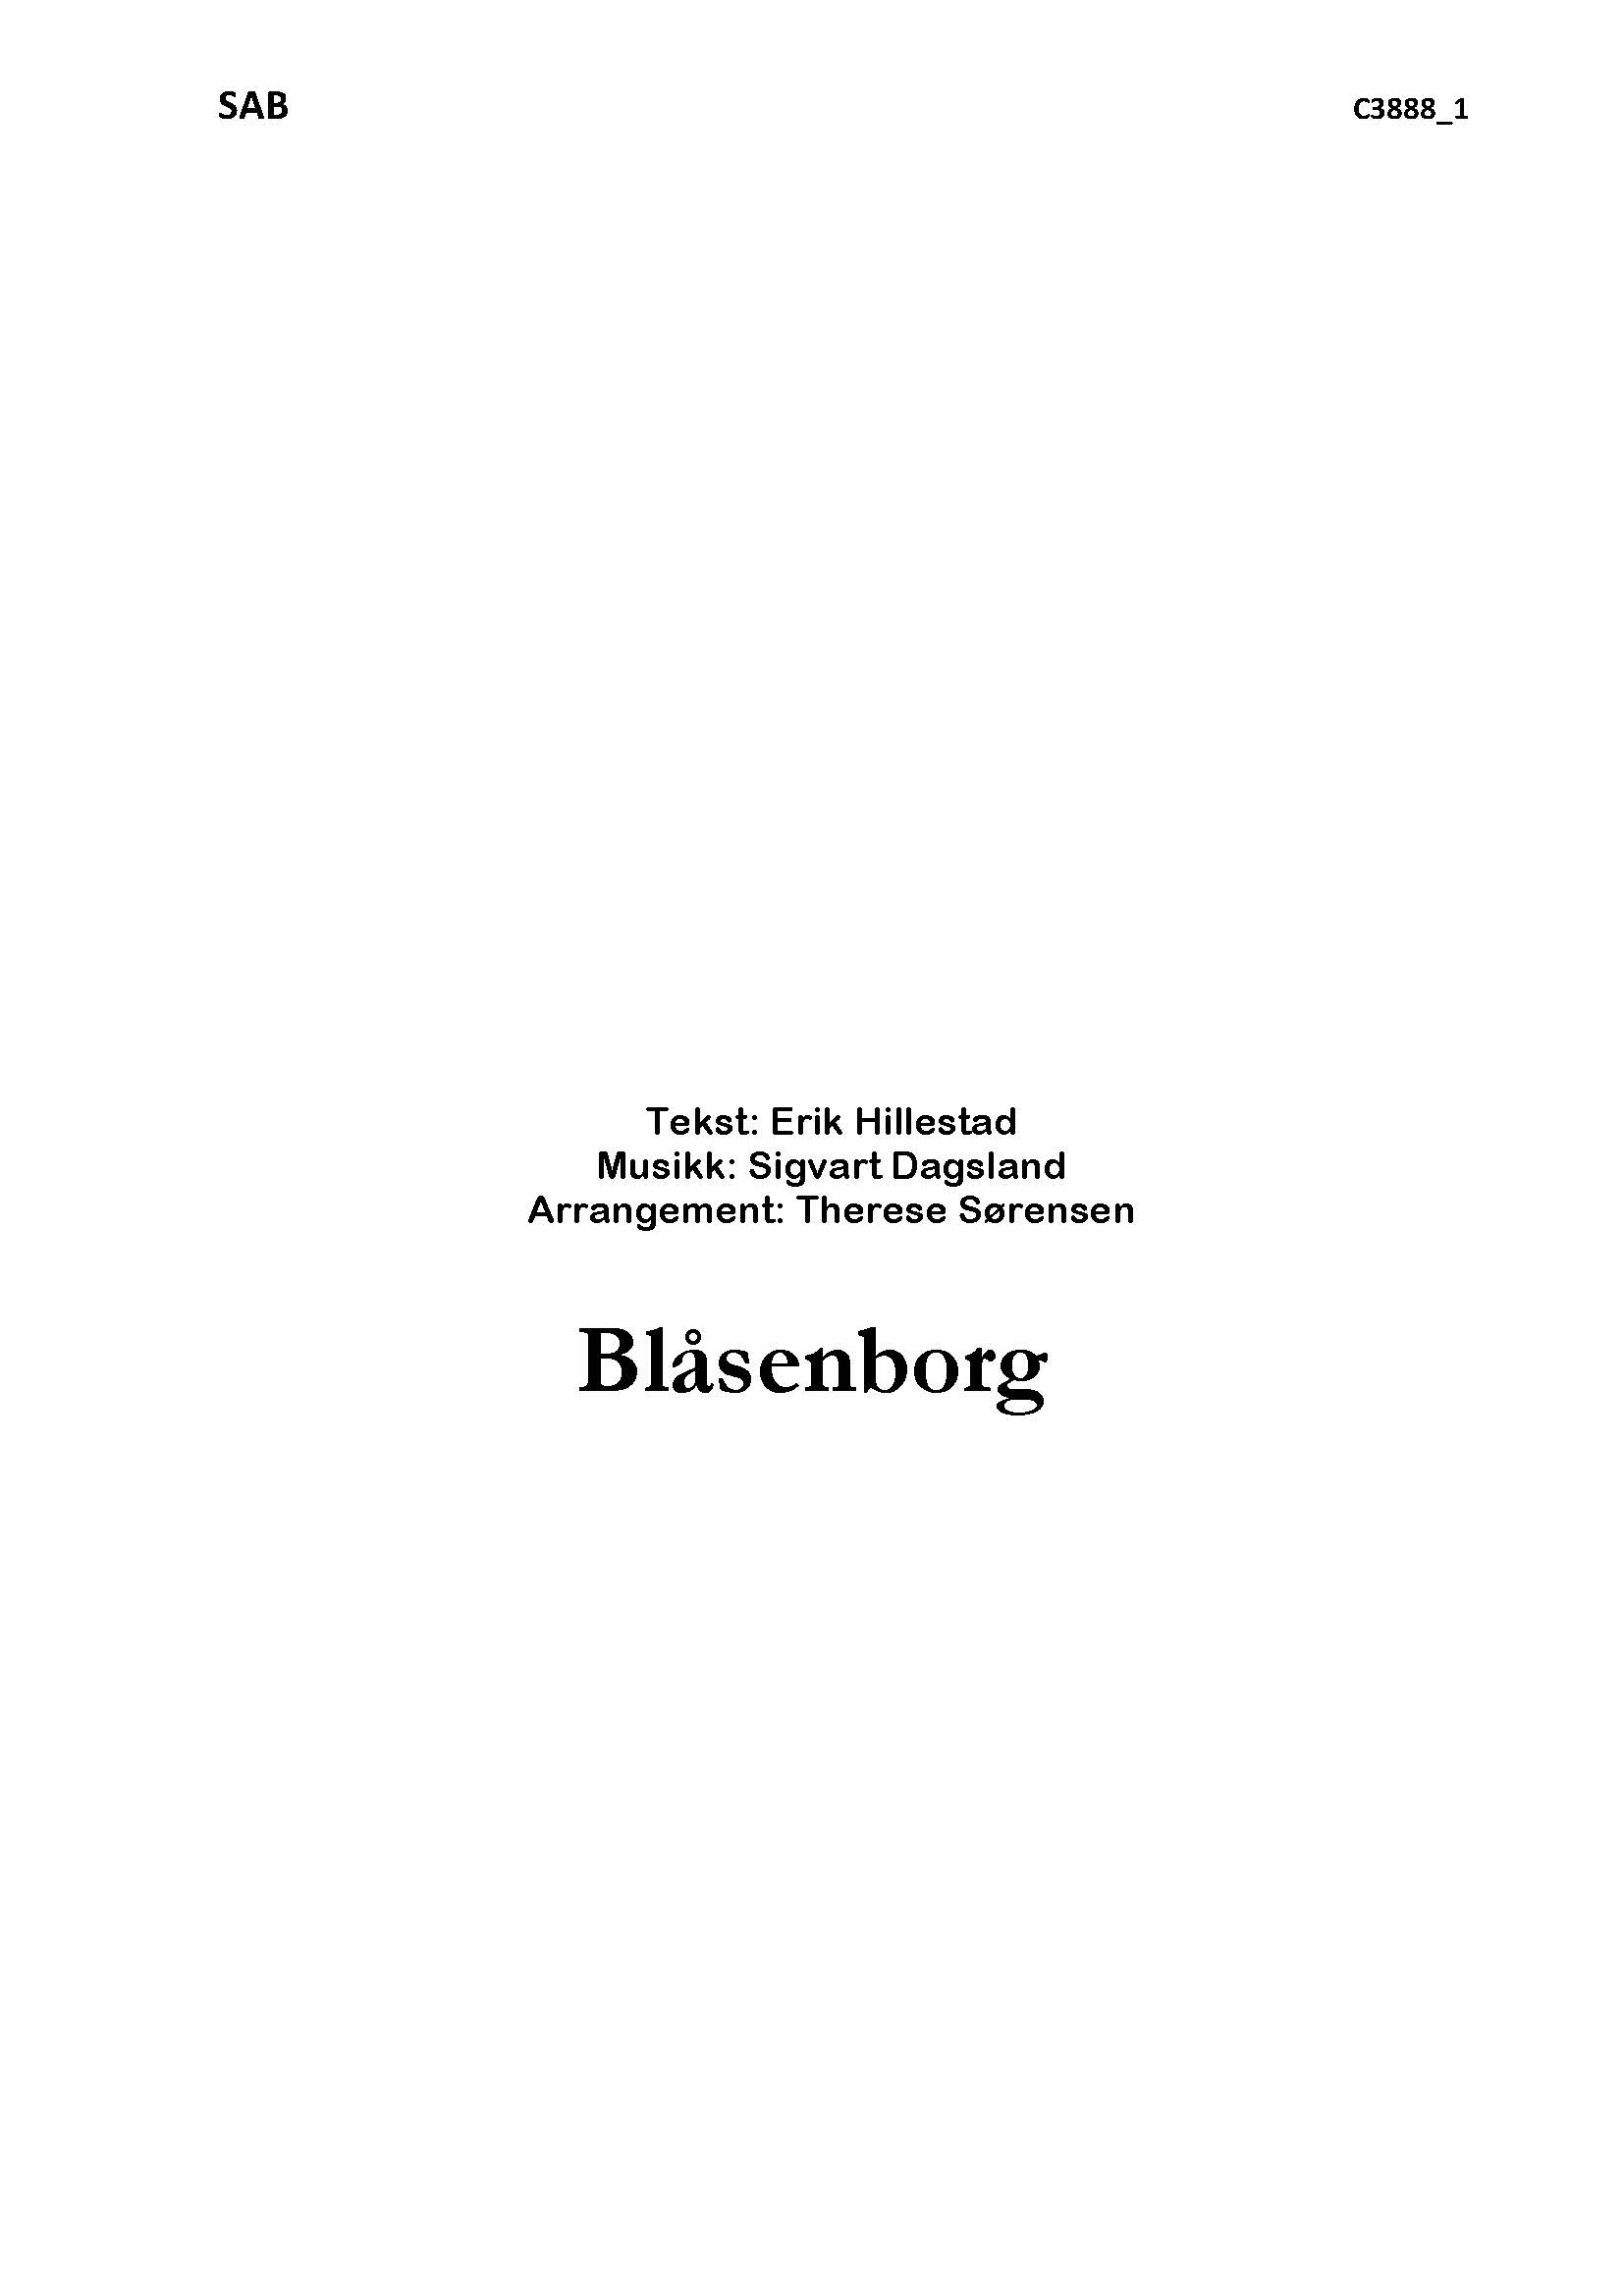 Blåsenborg - SAB